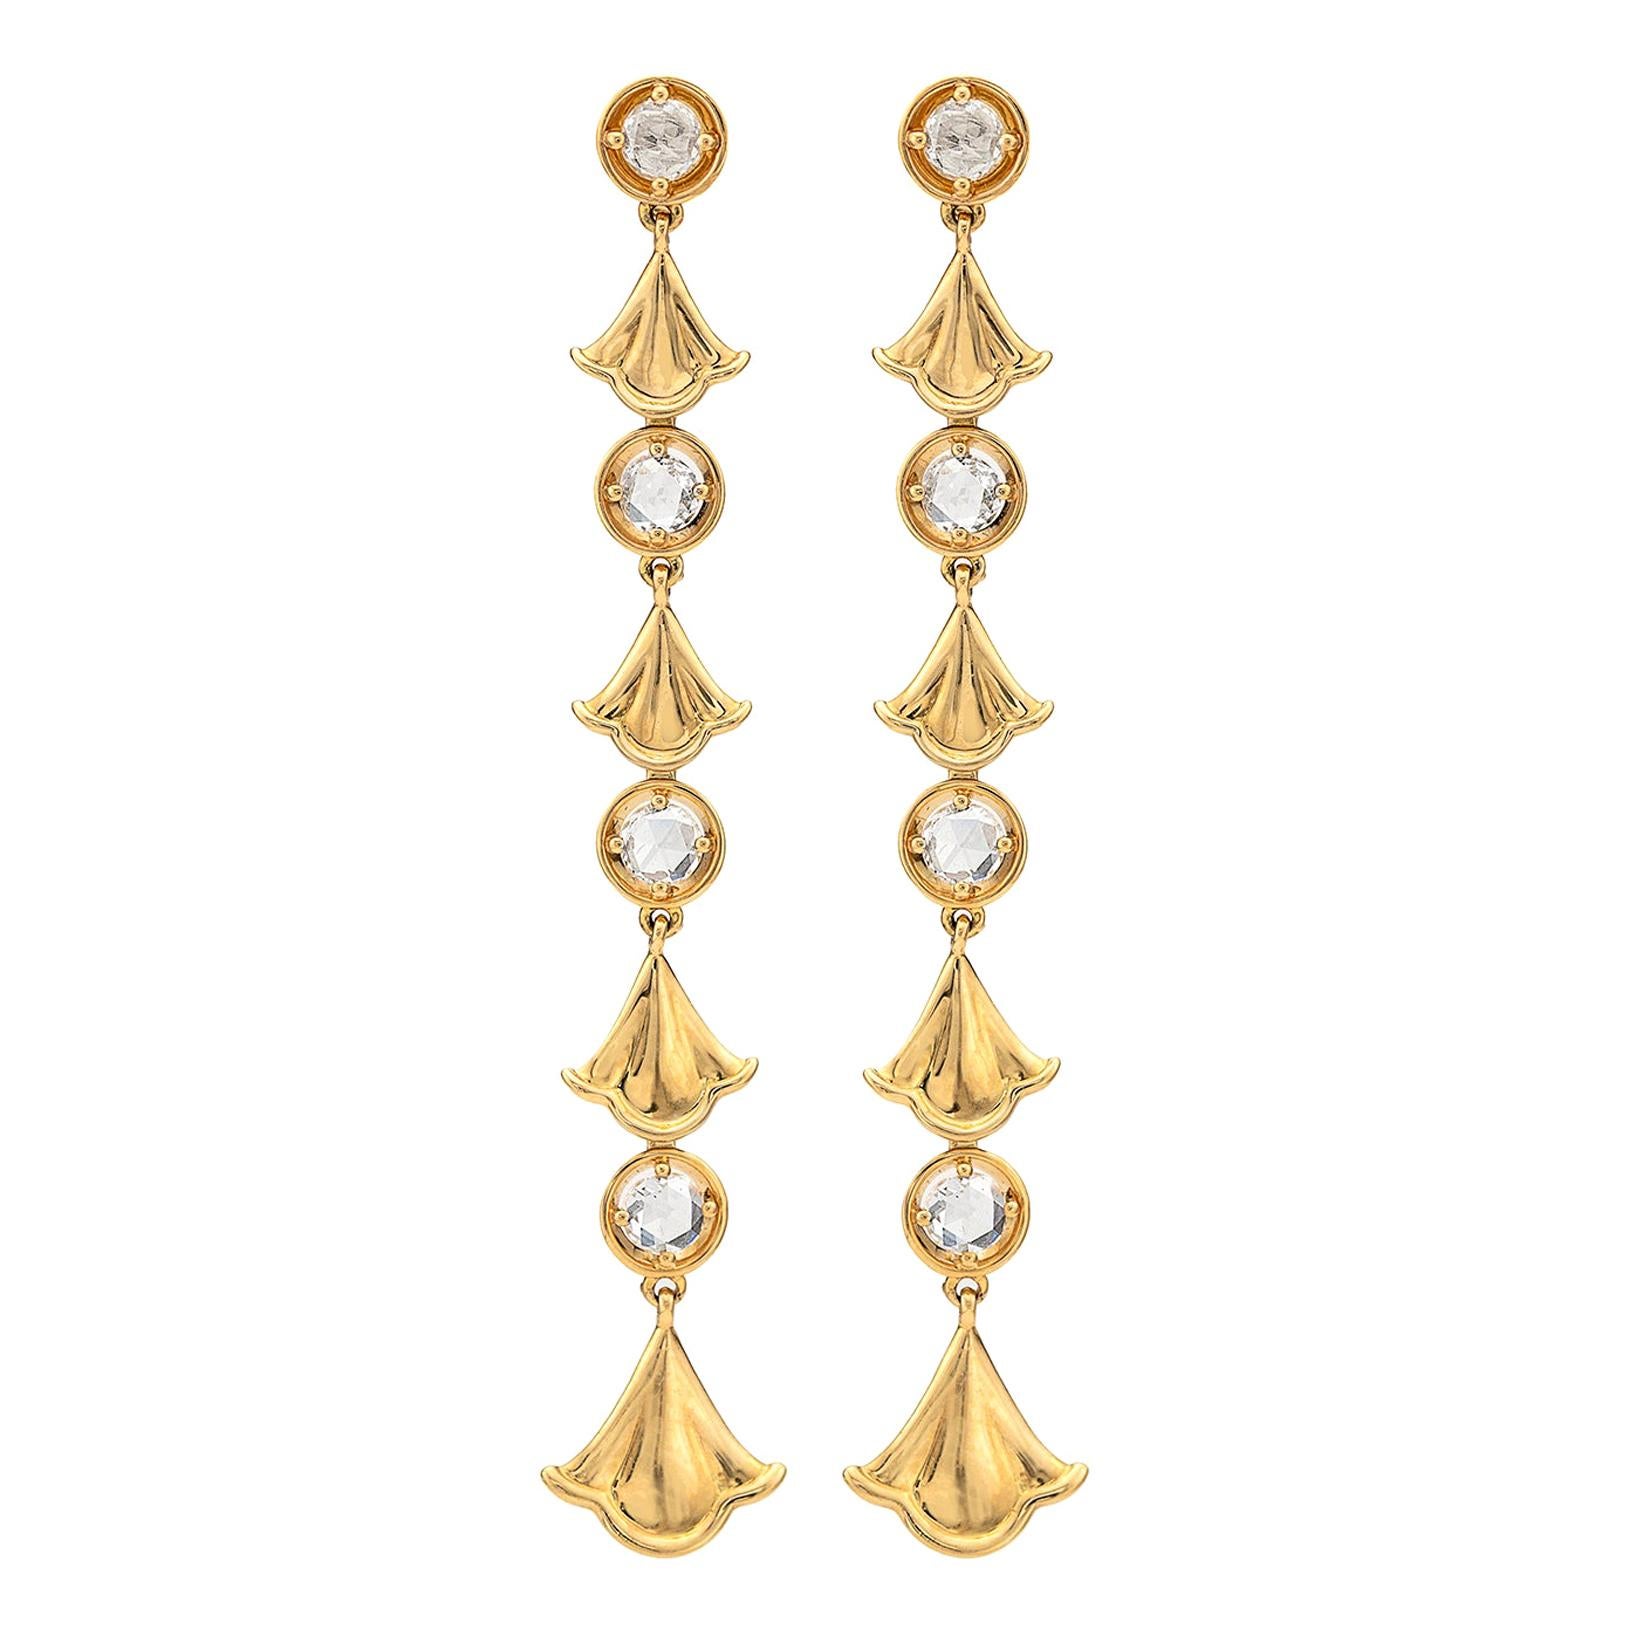 Diamond and 18 Karat Gold Pendant Earrings by Marina B.